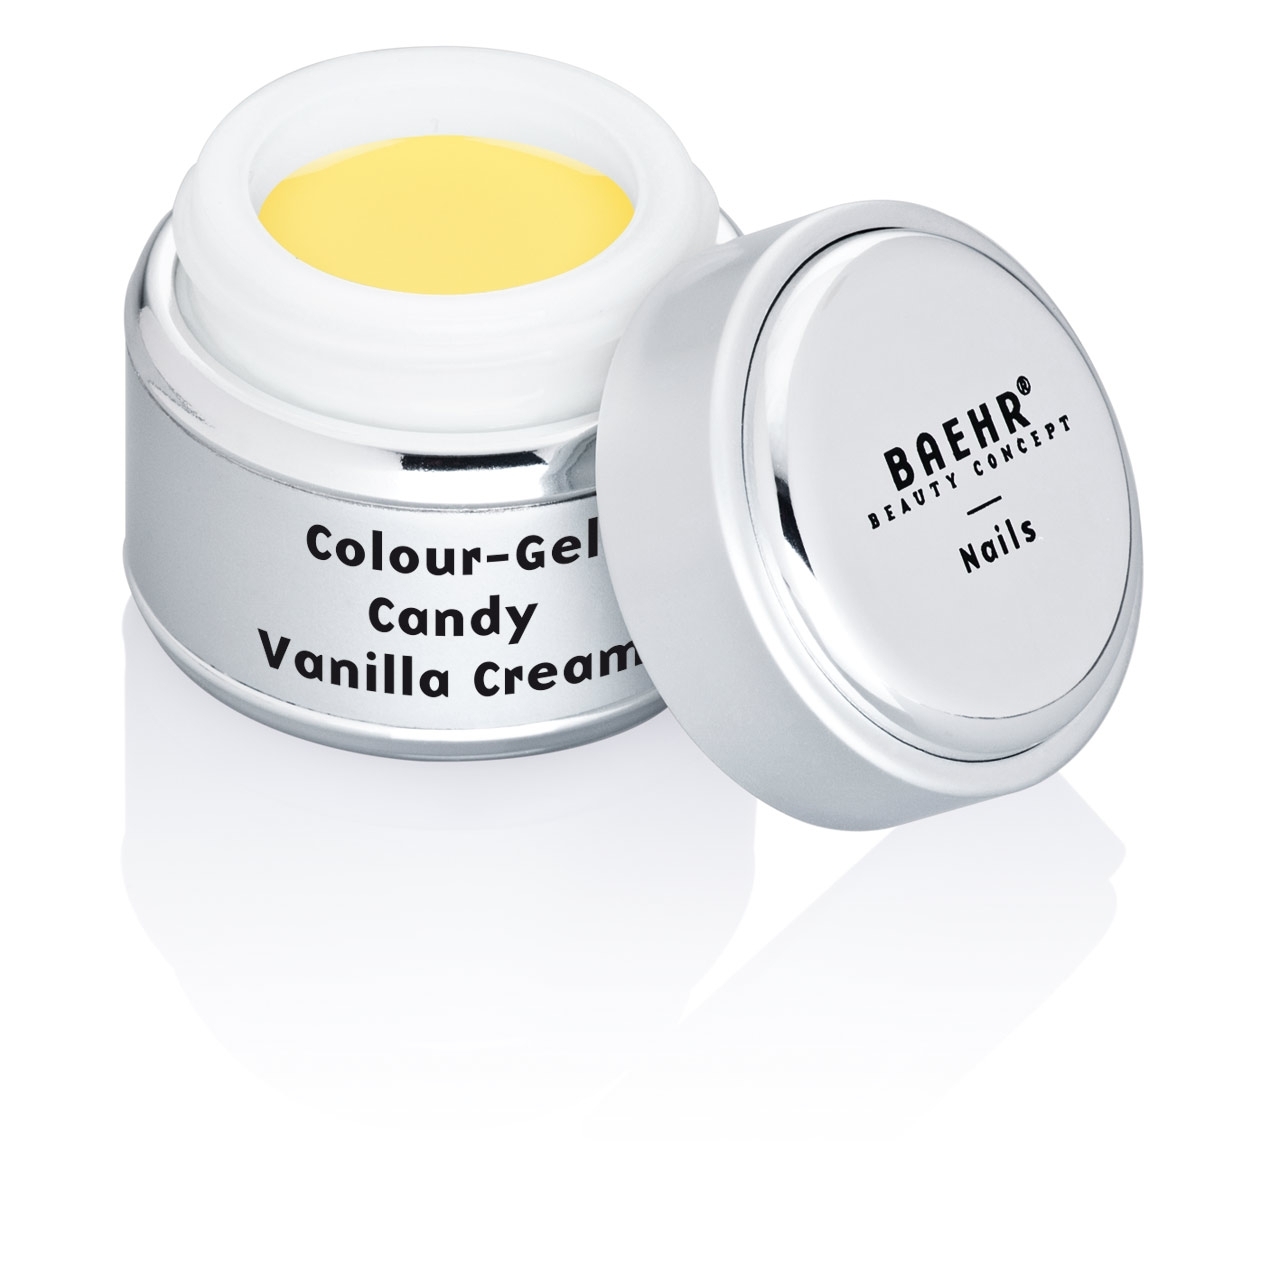 BAEHR BEAUTY CONCEPT NAILS Colour-Gel Candy Vanilla Cream 5 ml